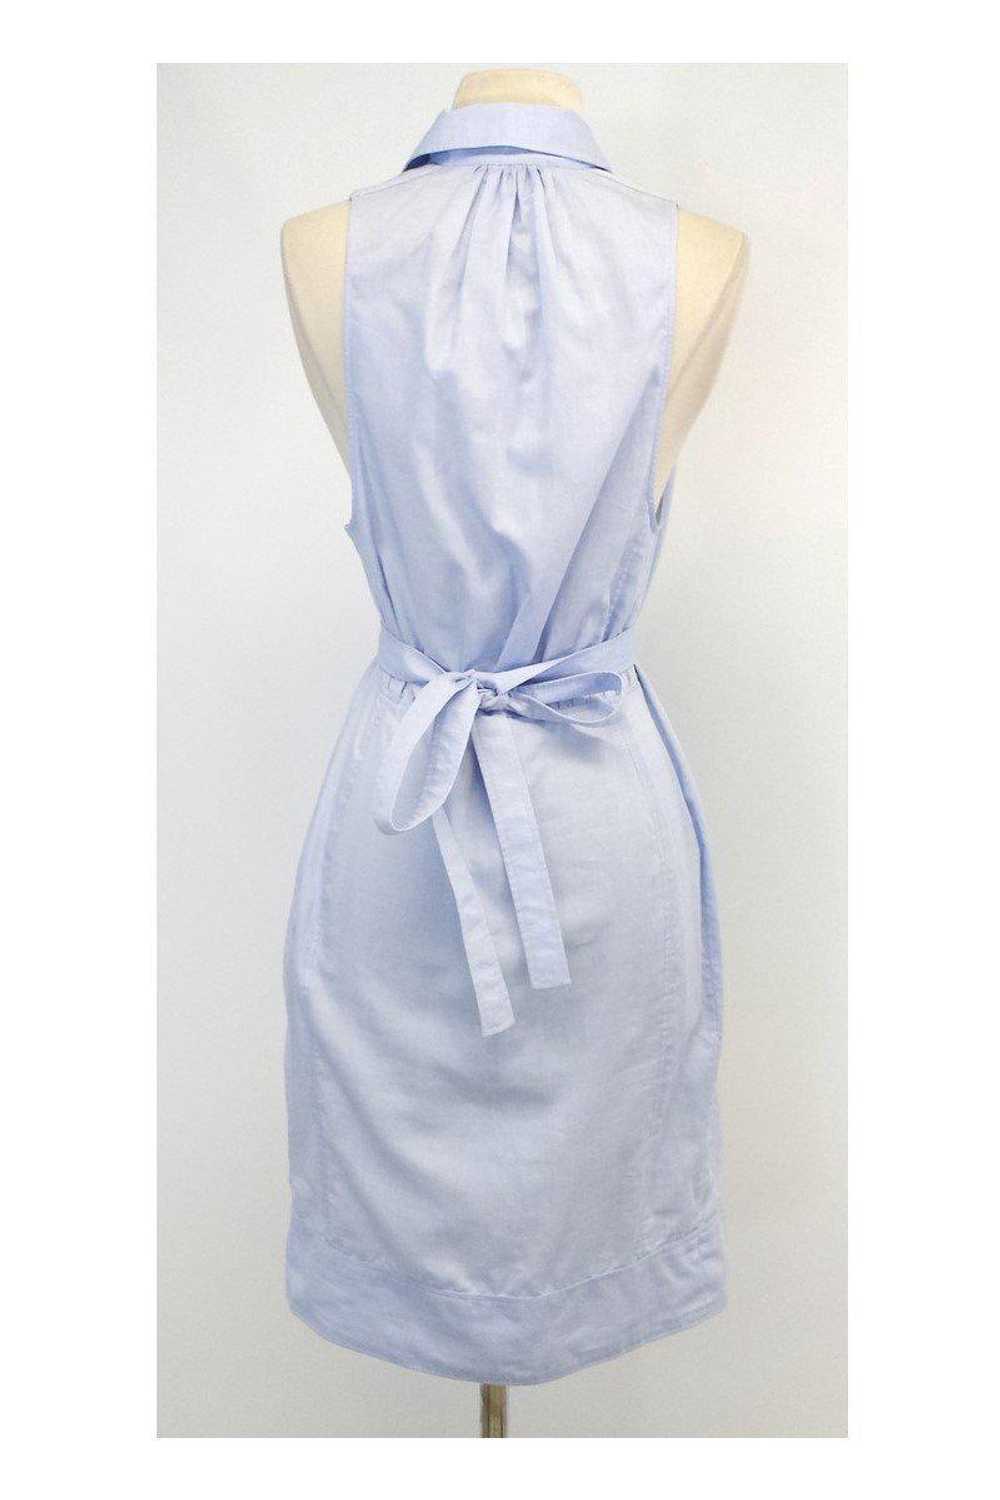 DSQUARED2 - Light Blue Cotton Sleeveless Shirtdre… - image 3